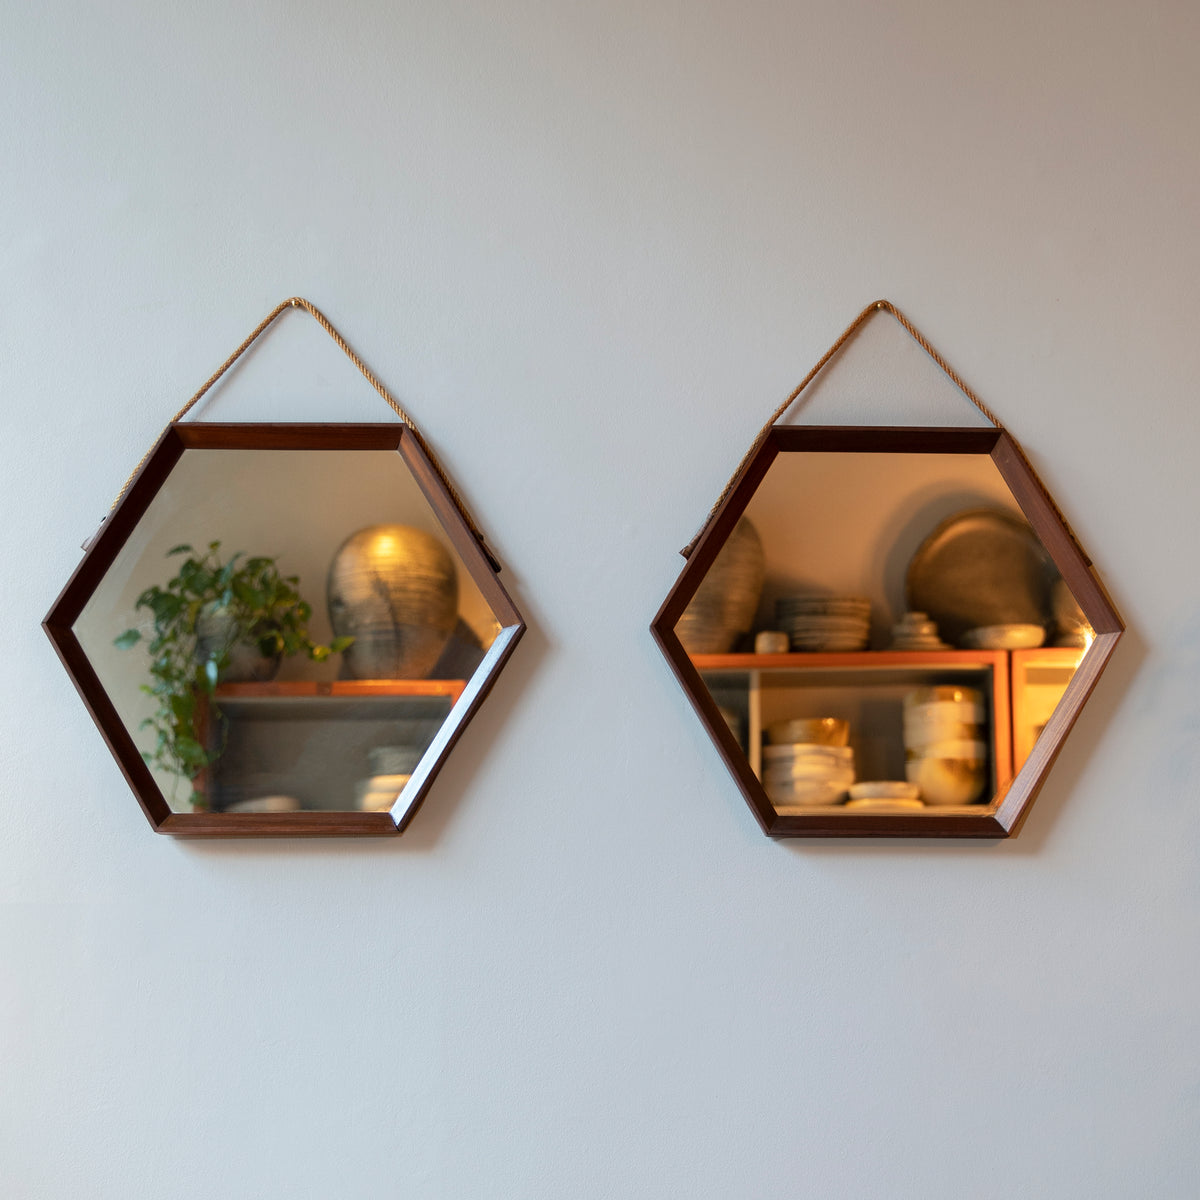 Pair of Hexagonal Wall Mirrors / Denmark, 1950s